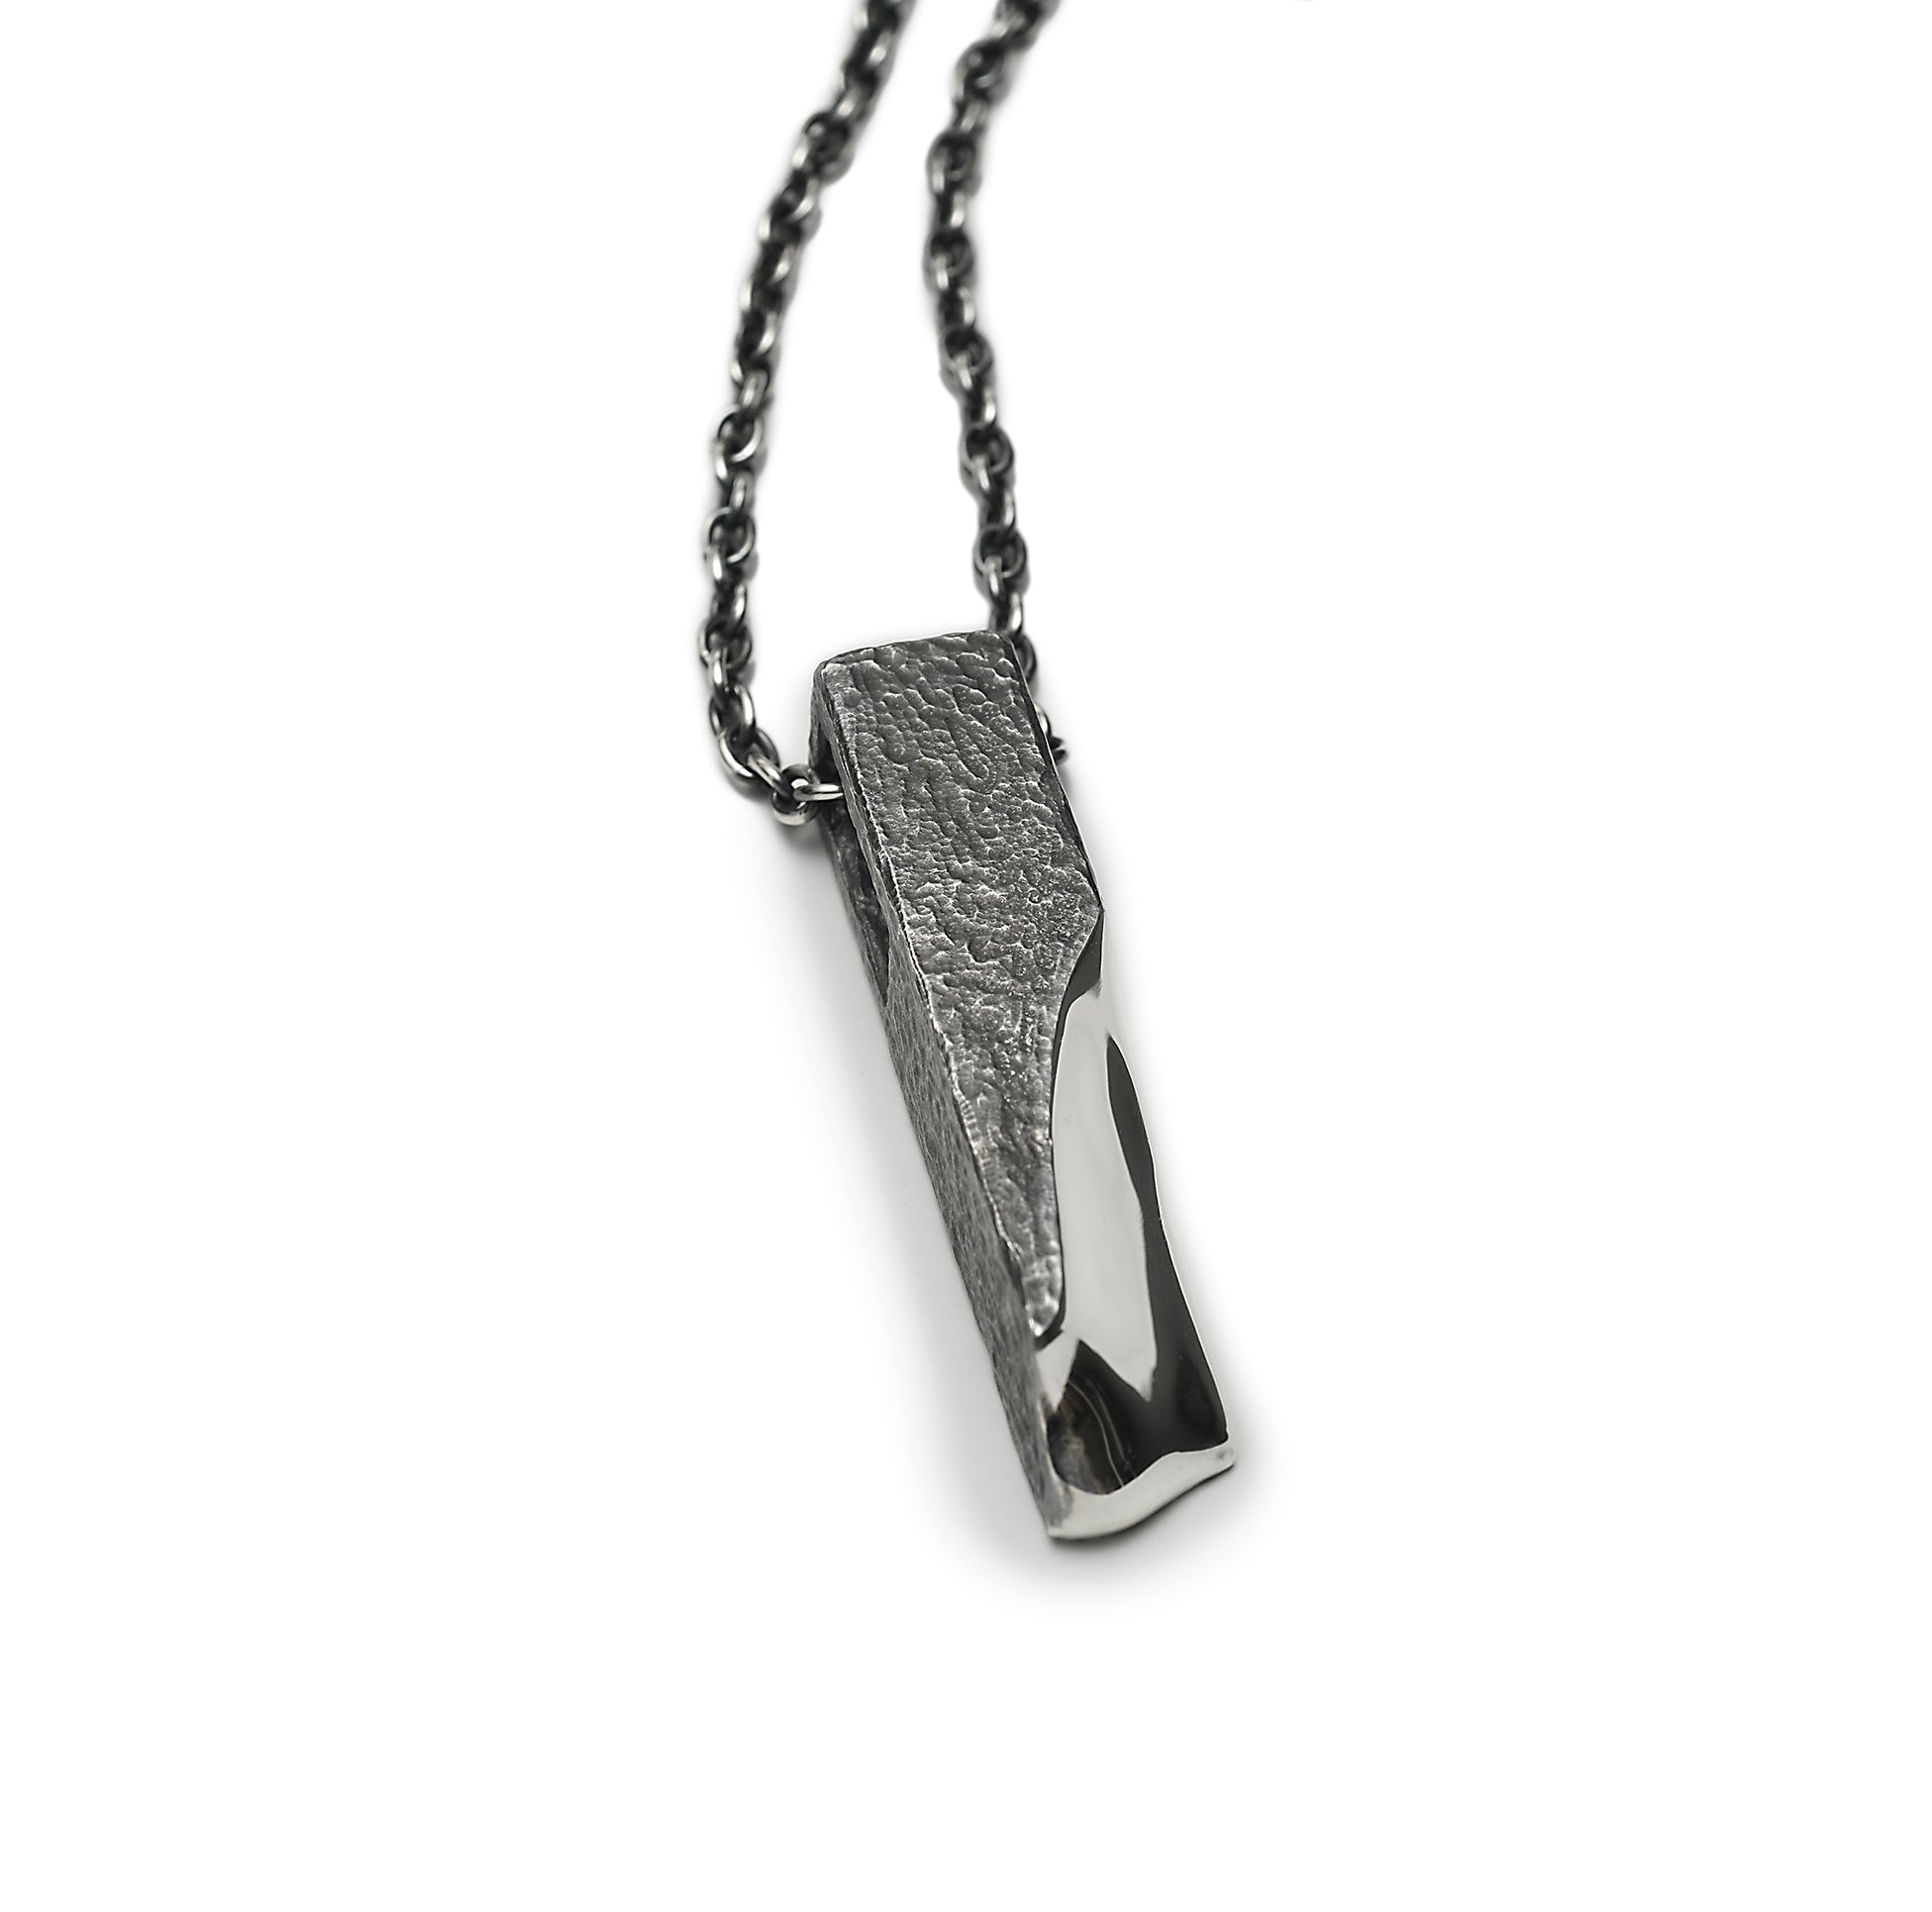 metamorphosis - Silver necklace with original clasp